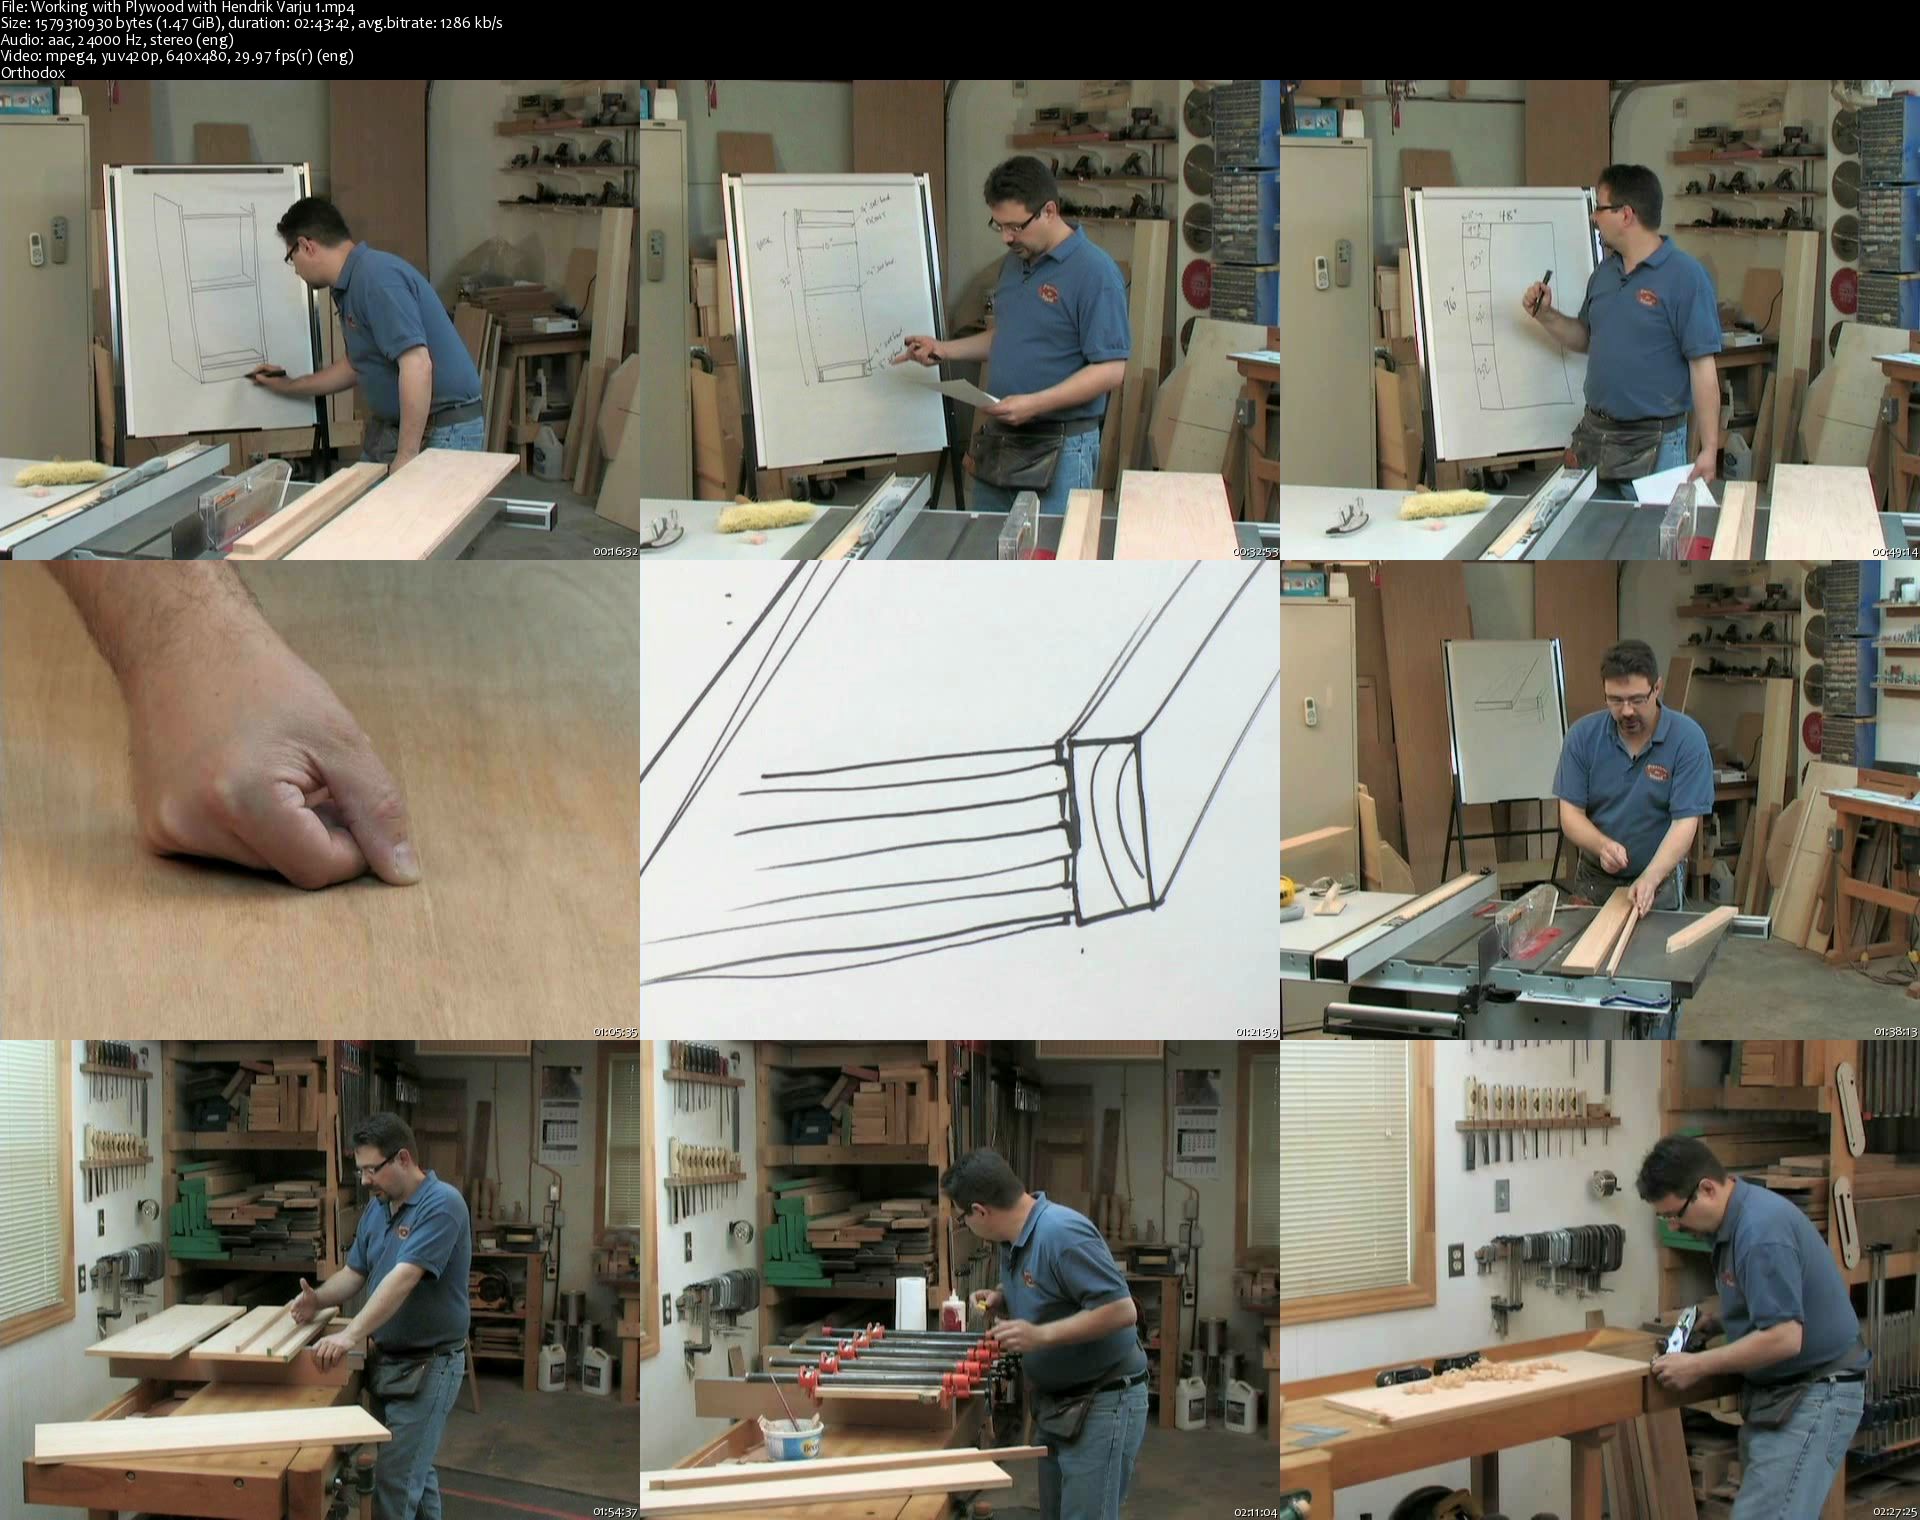 Working-with-Plywood-with-Hendrik-Varju-1-s.jpg